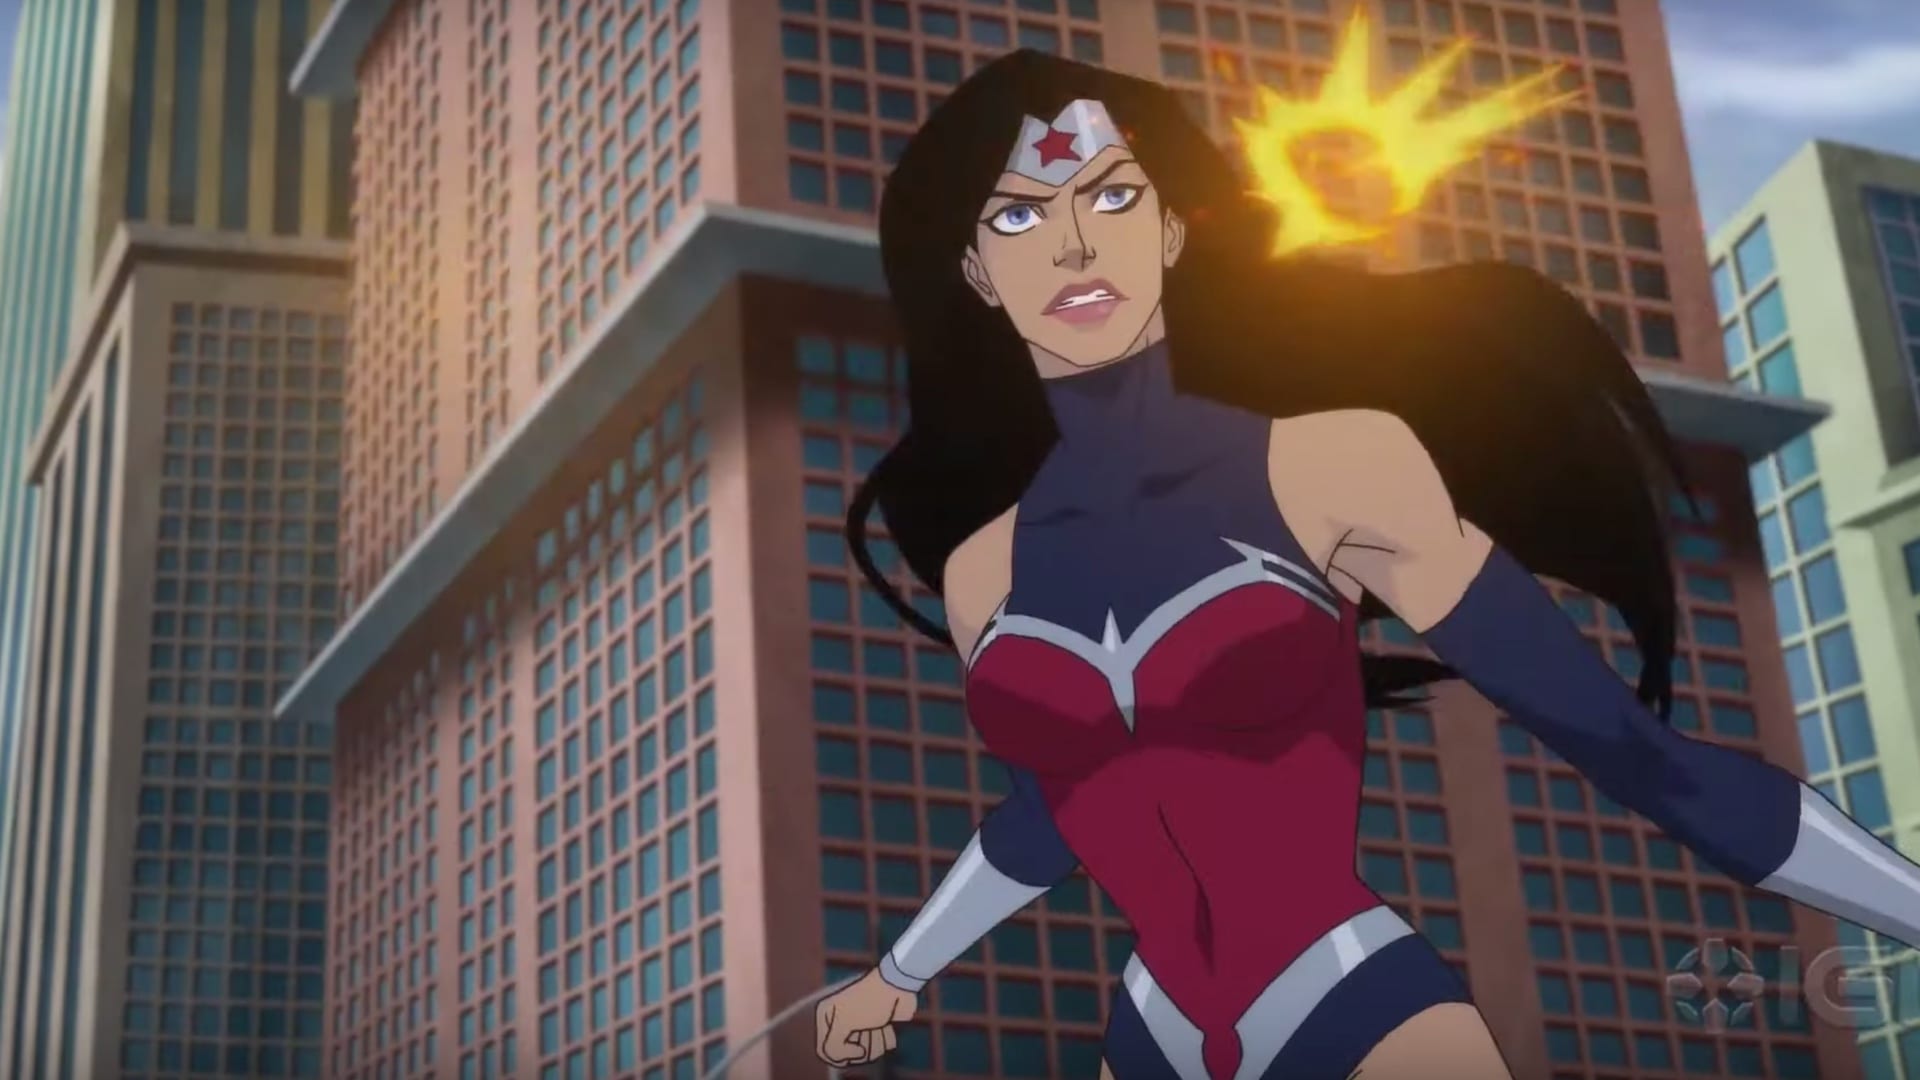 Justice League Teen Wonder Woman Costume